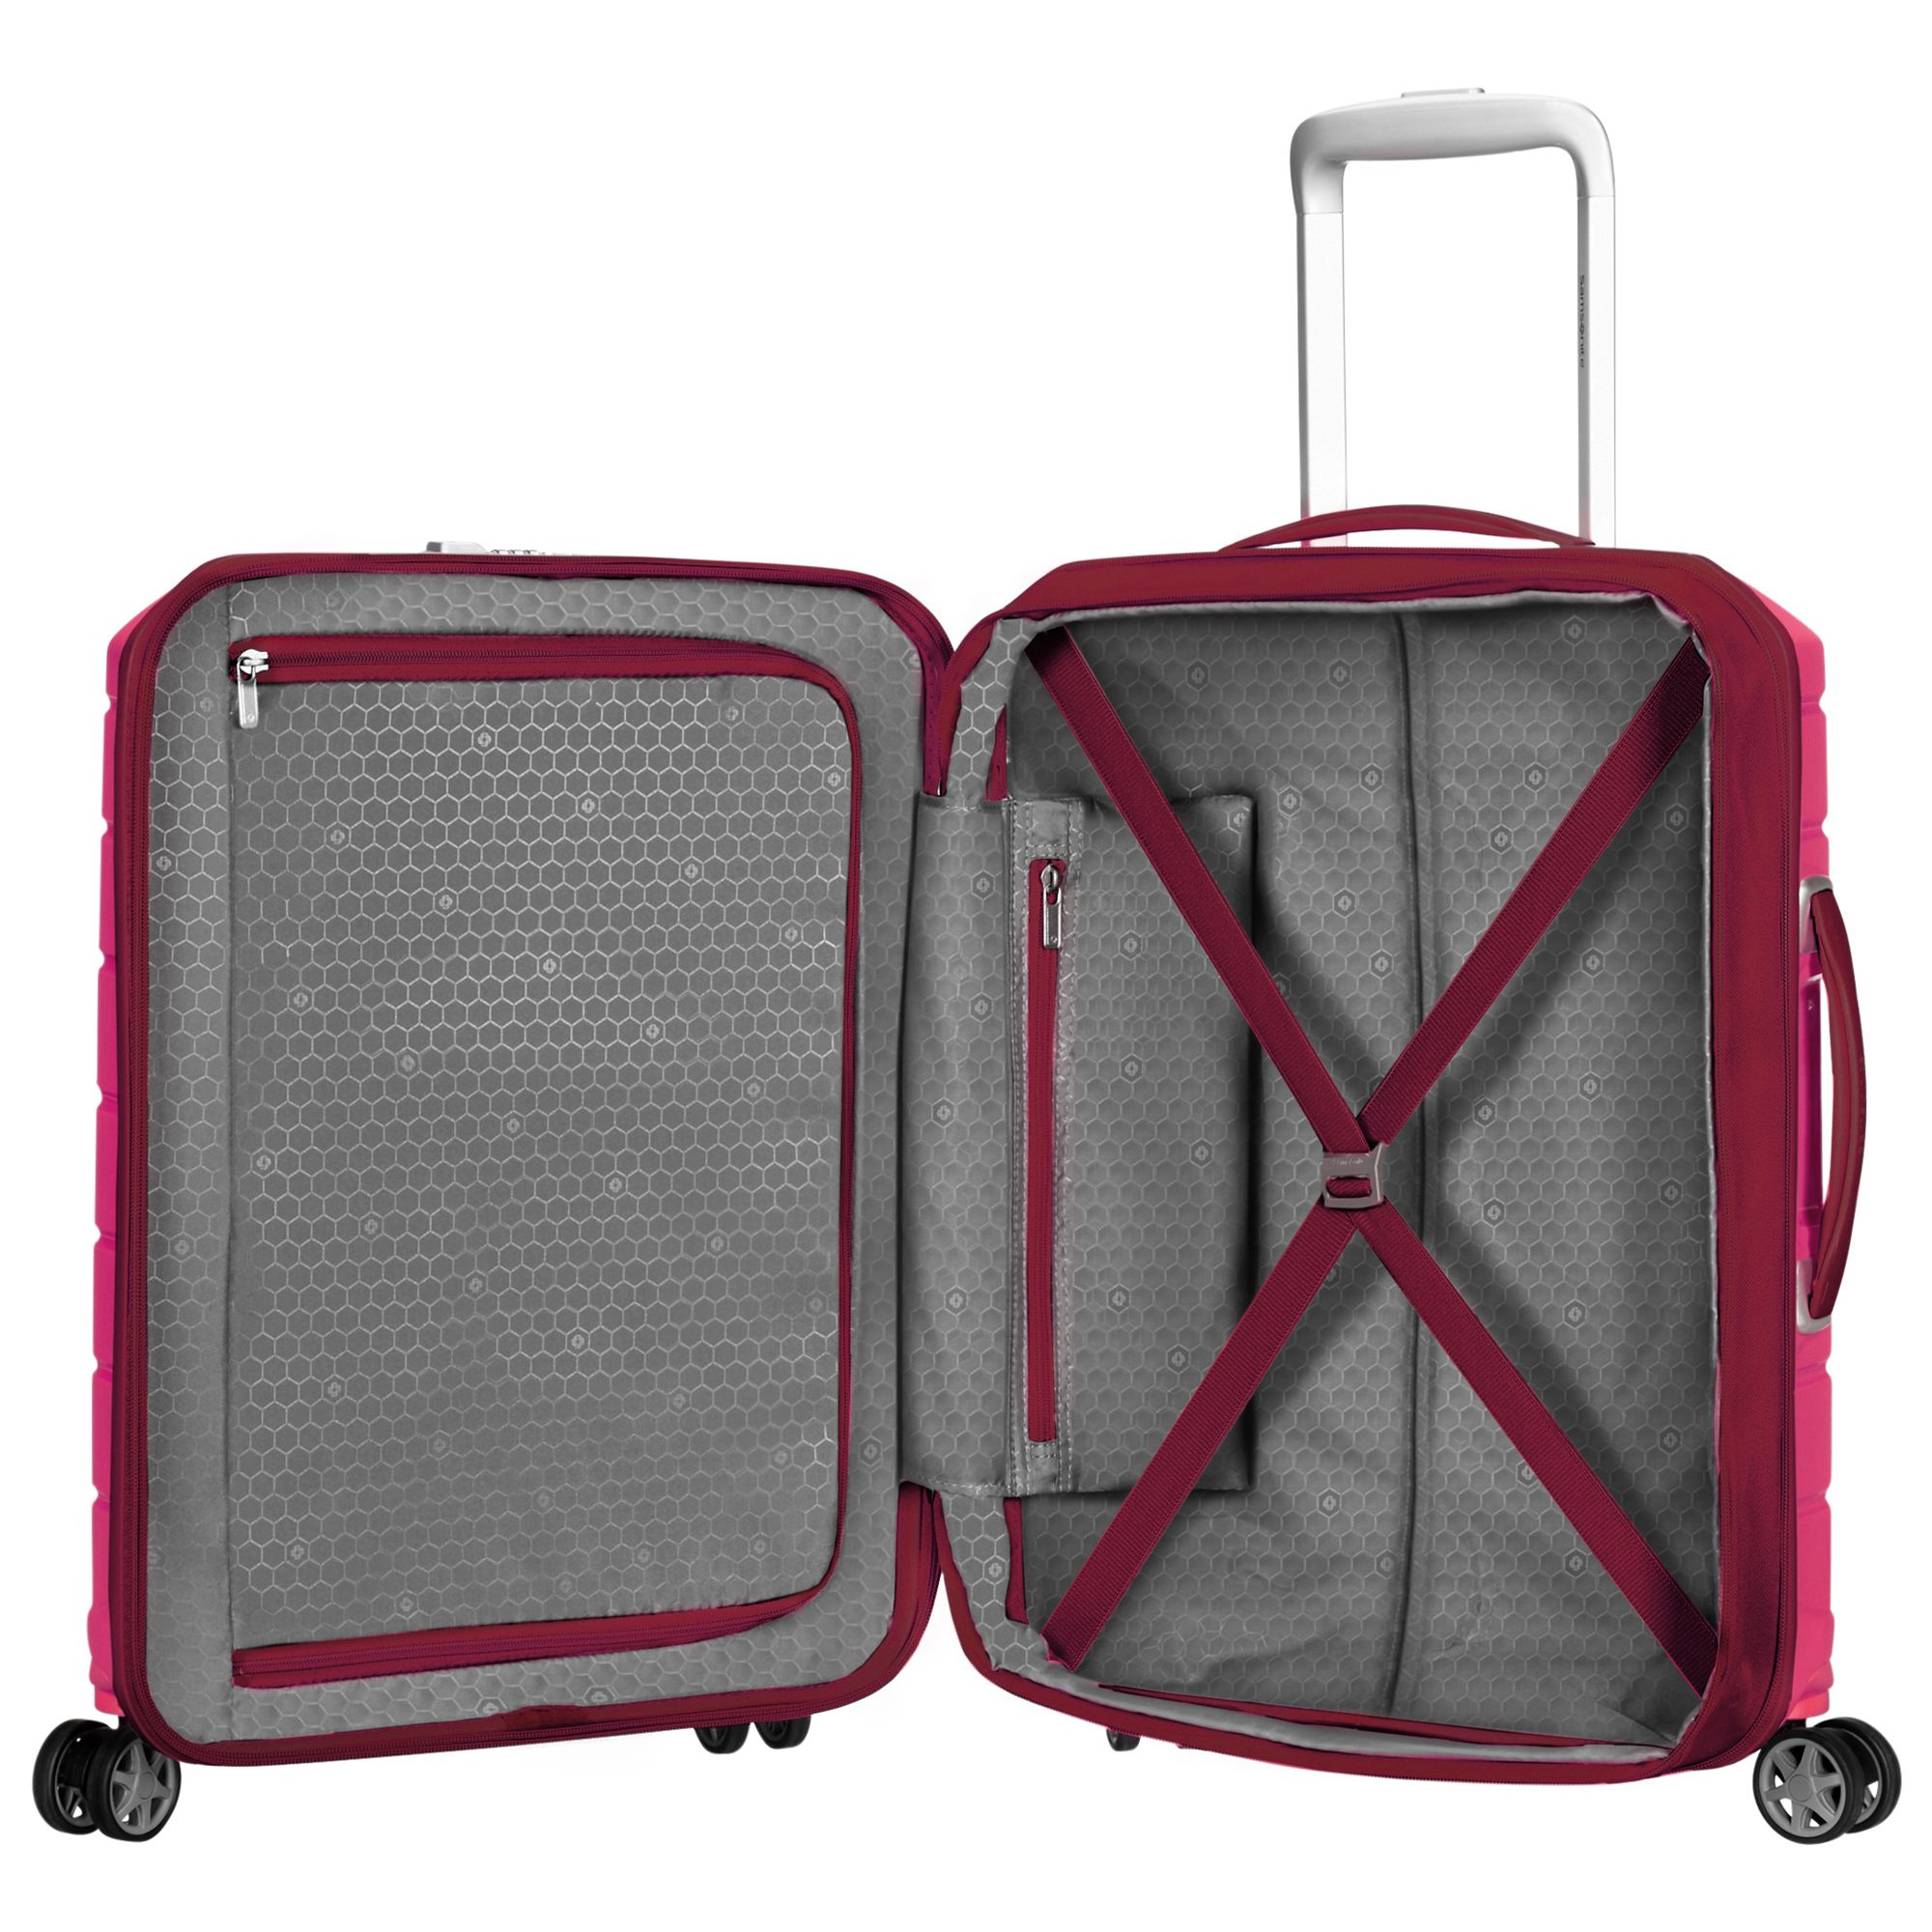 Samsonite Flux Spinner 4-Wheel 55cm Cabin Suitcase, Red Berry